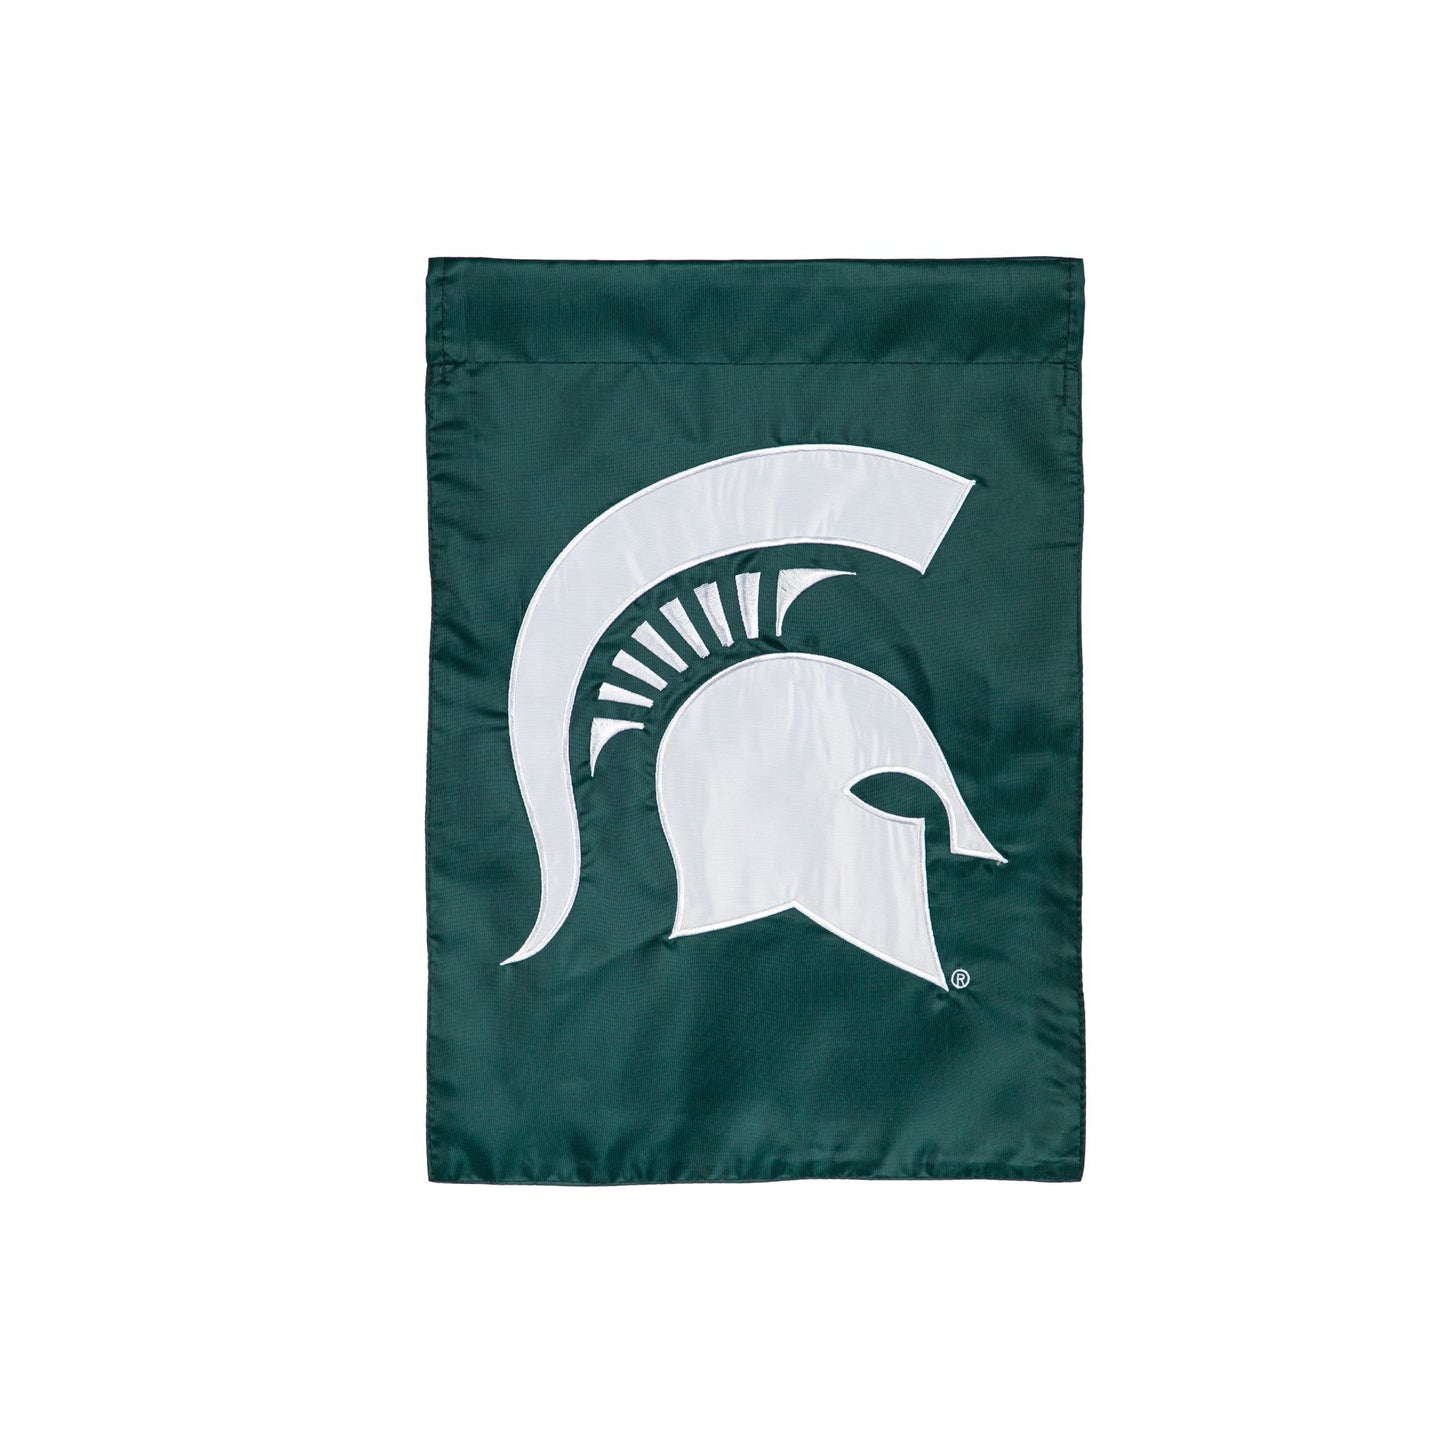 Applique Flag, Gar., Michigan State University